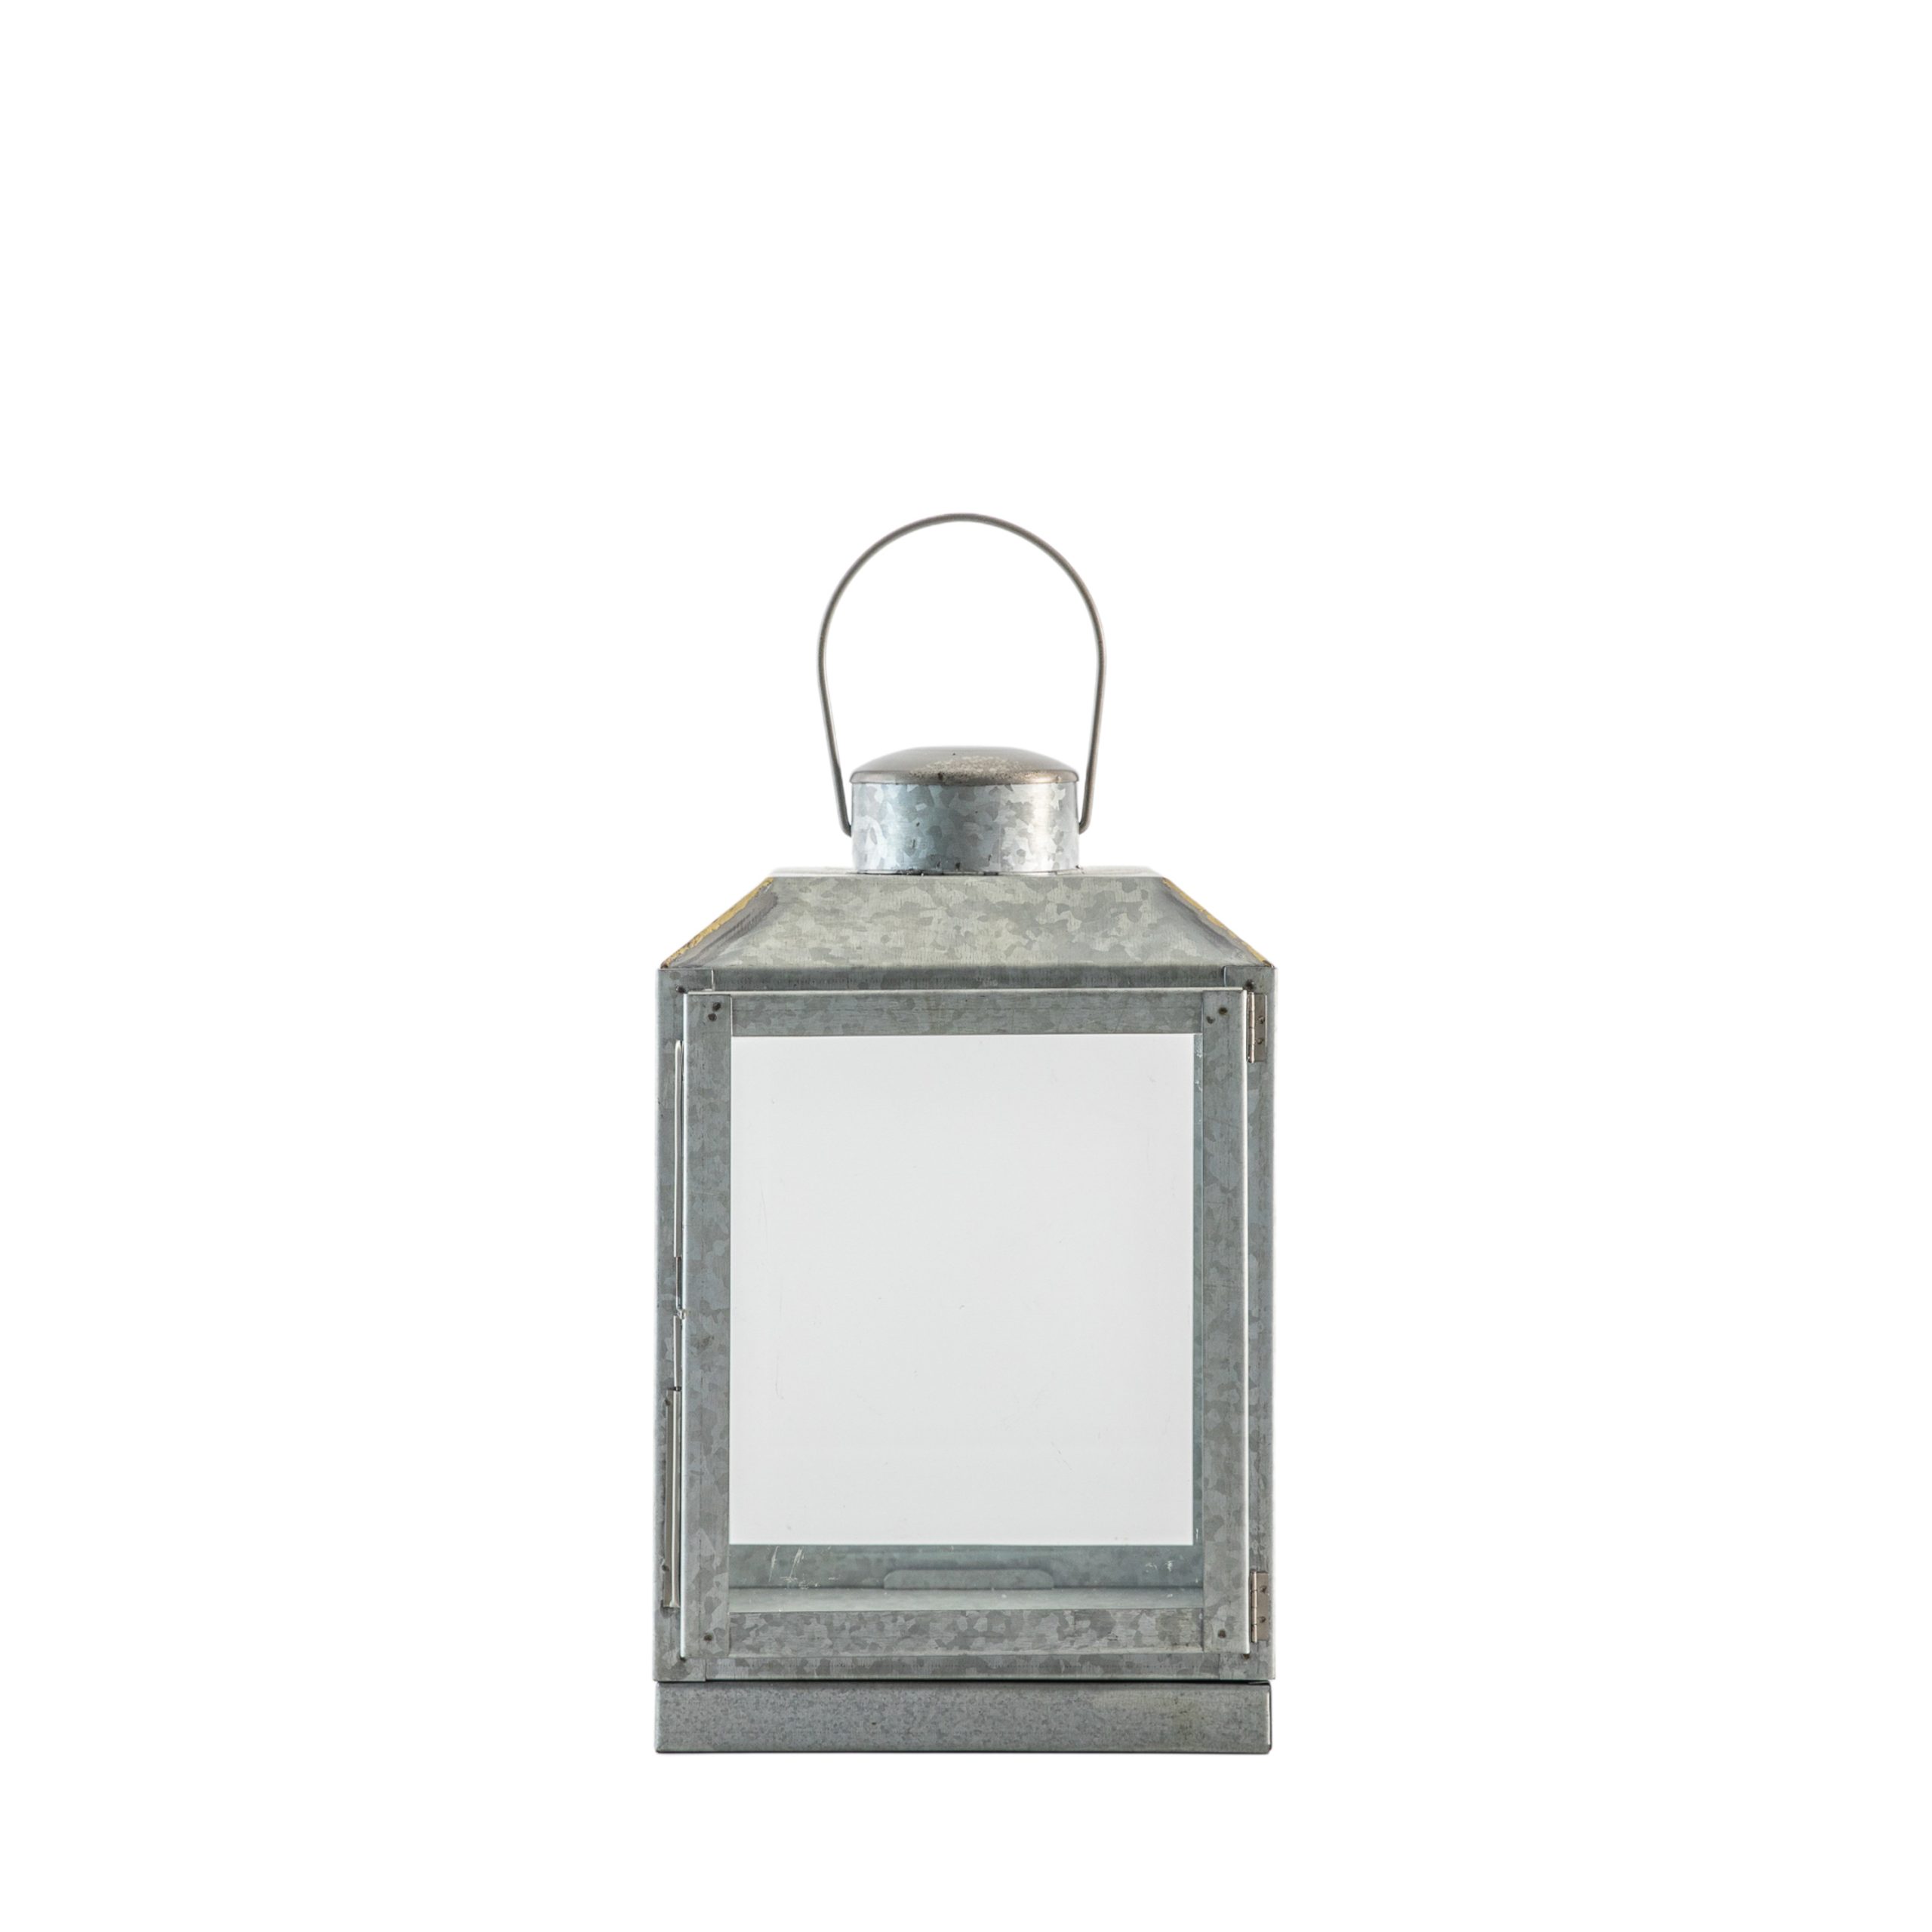 Gallery Direct Advik Lantern Small